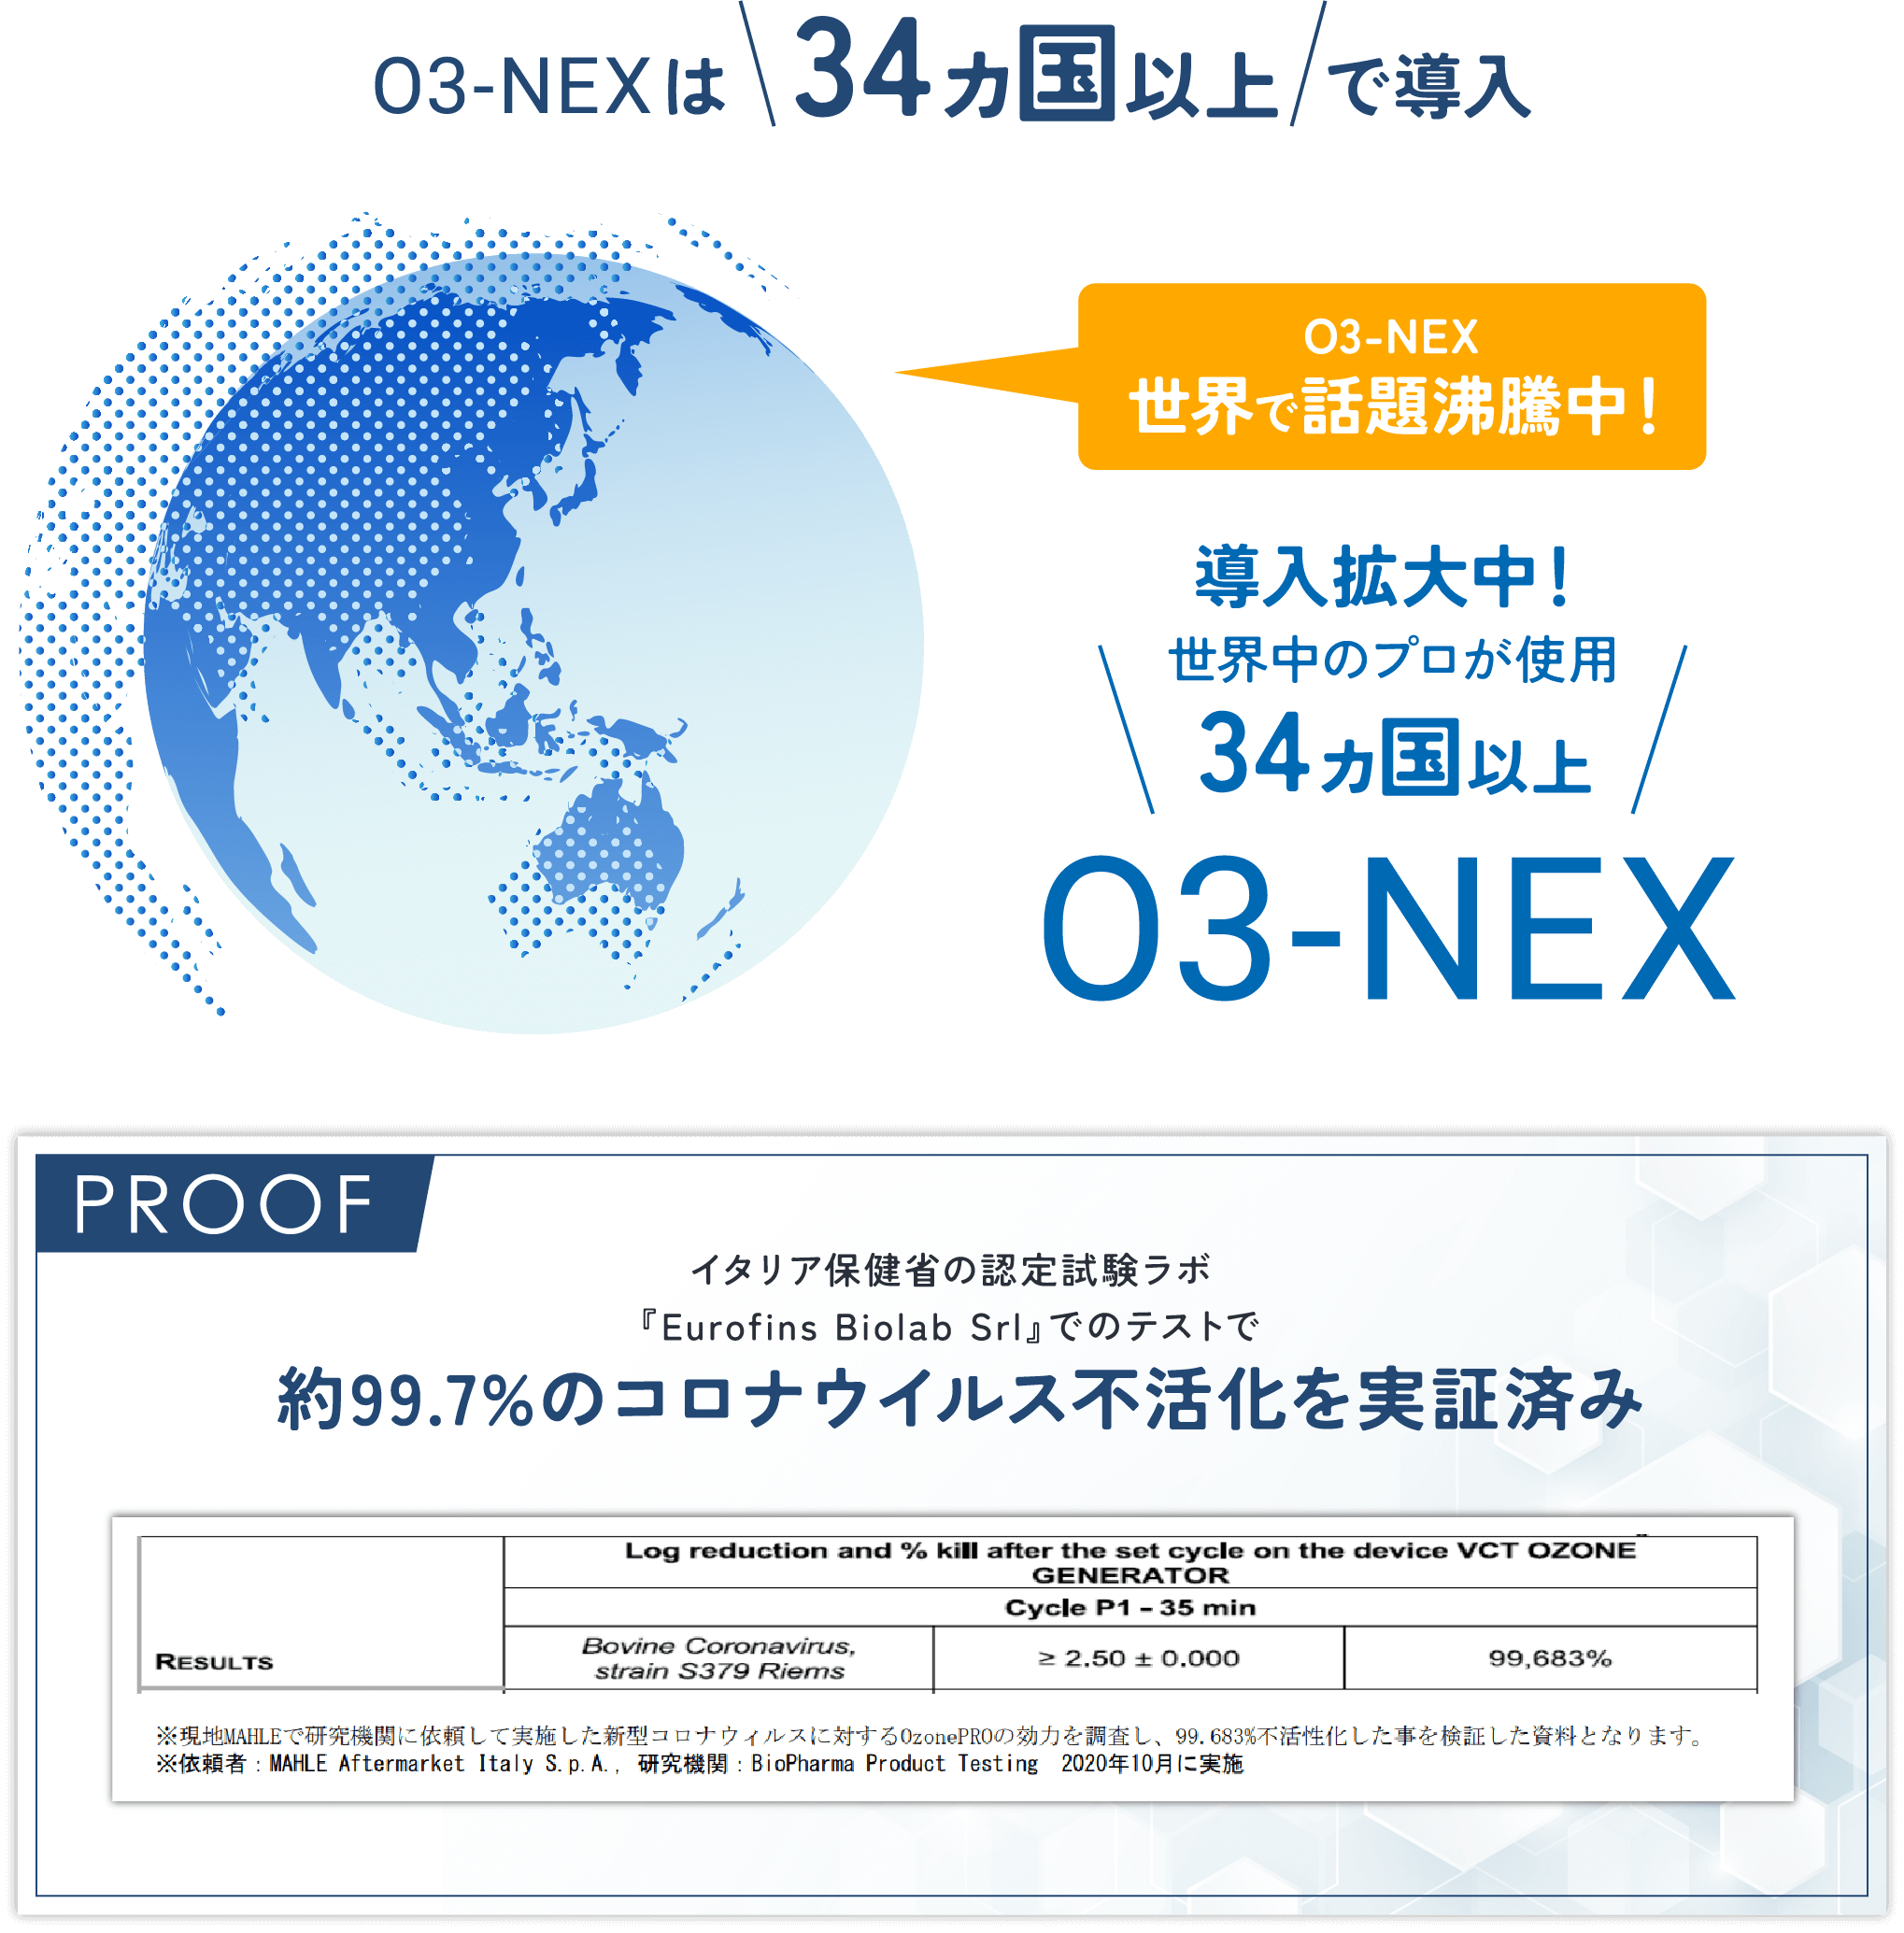 O3-NEXは34ヵ国以上で導入